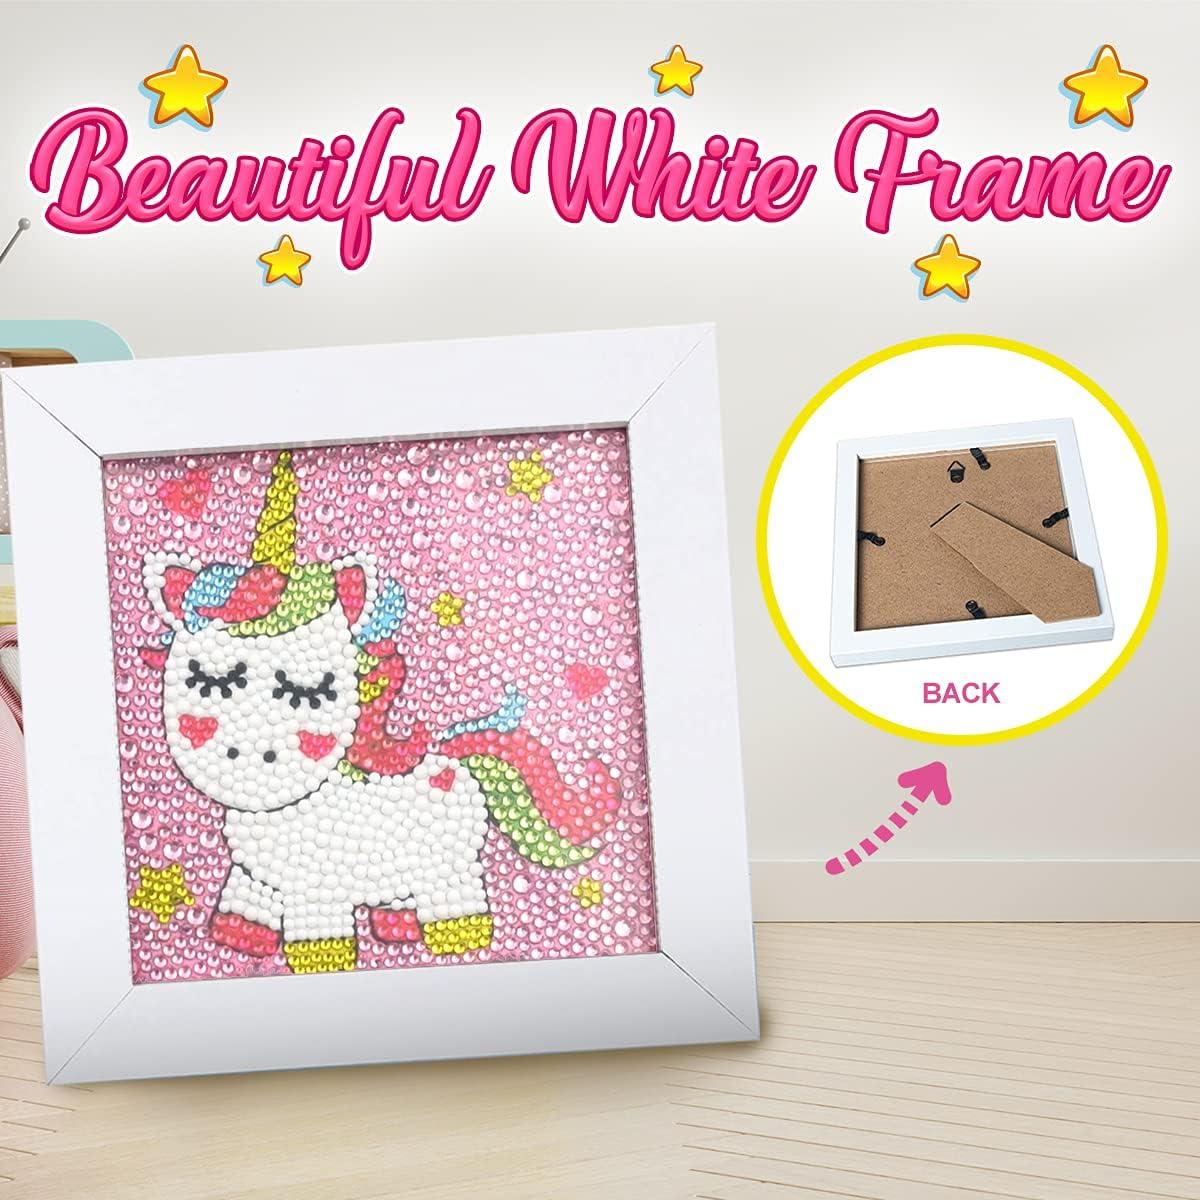 Unicorn Painting Kit for Girls